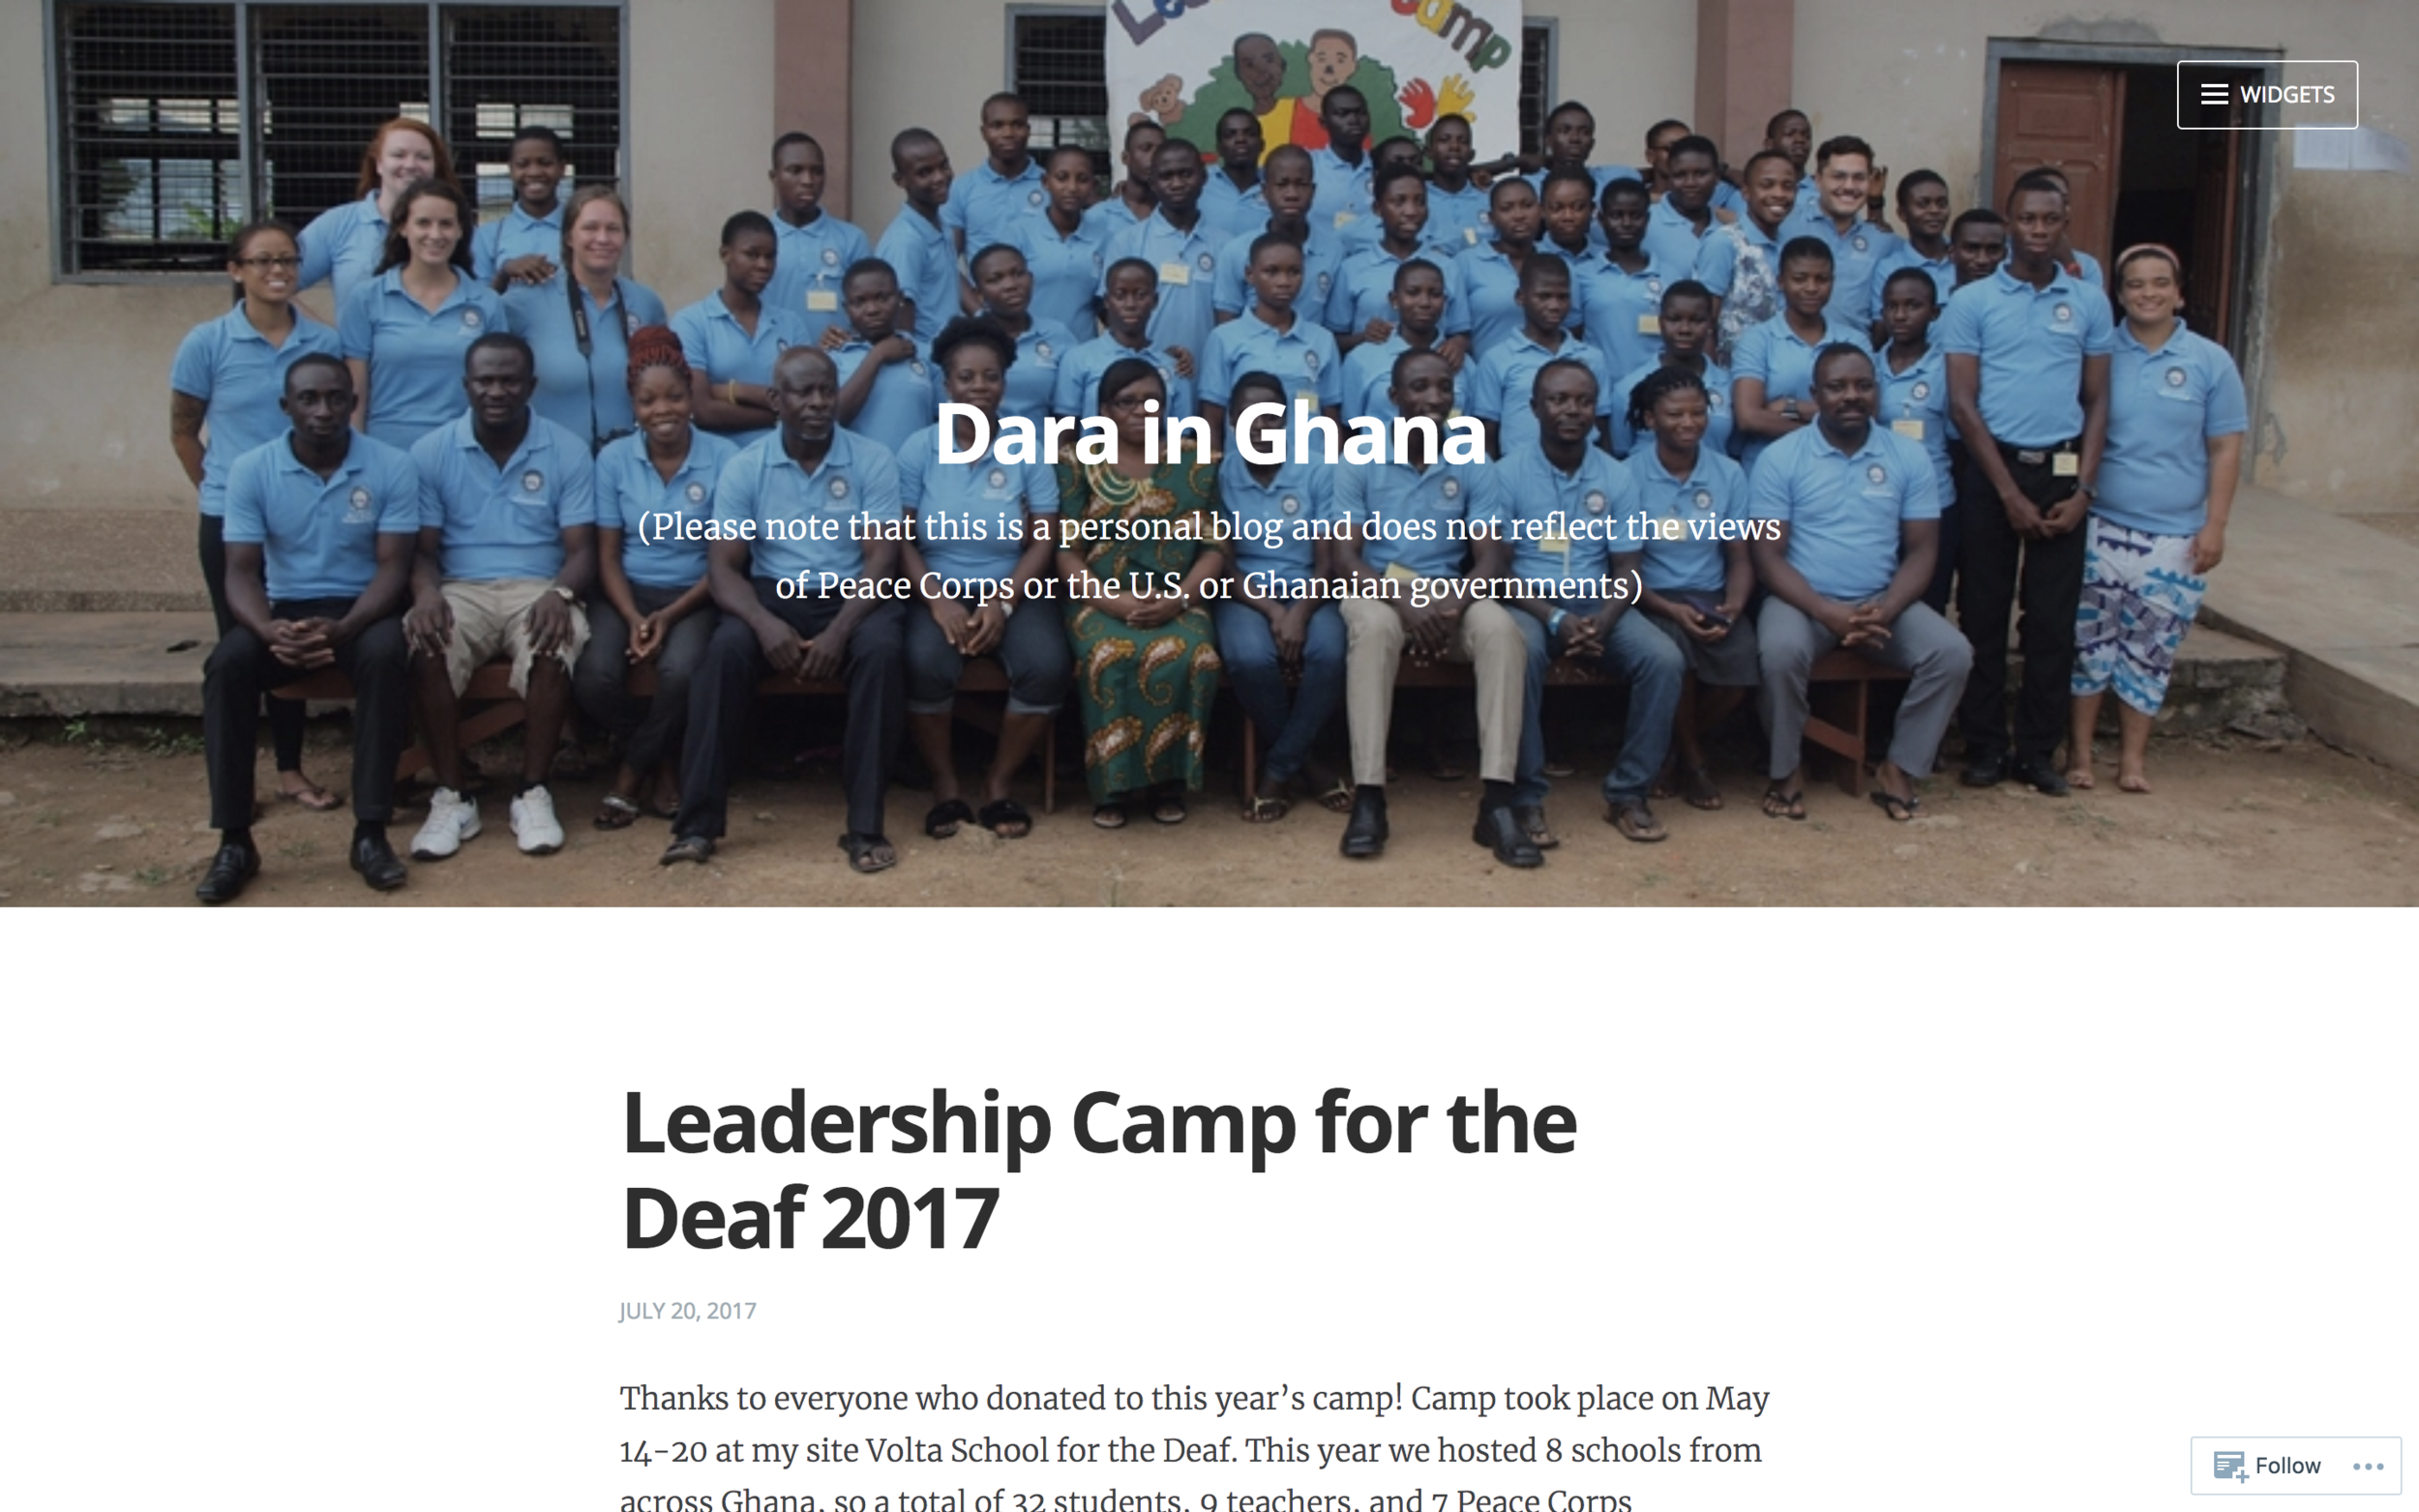 Dara in Ghana Blog